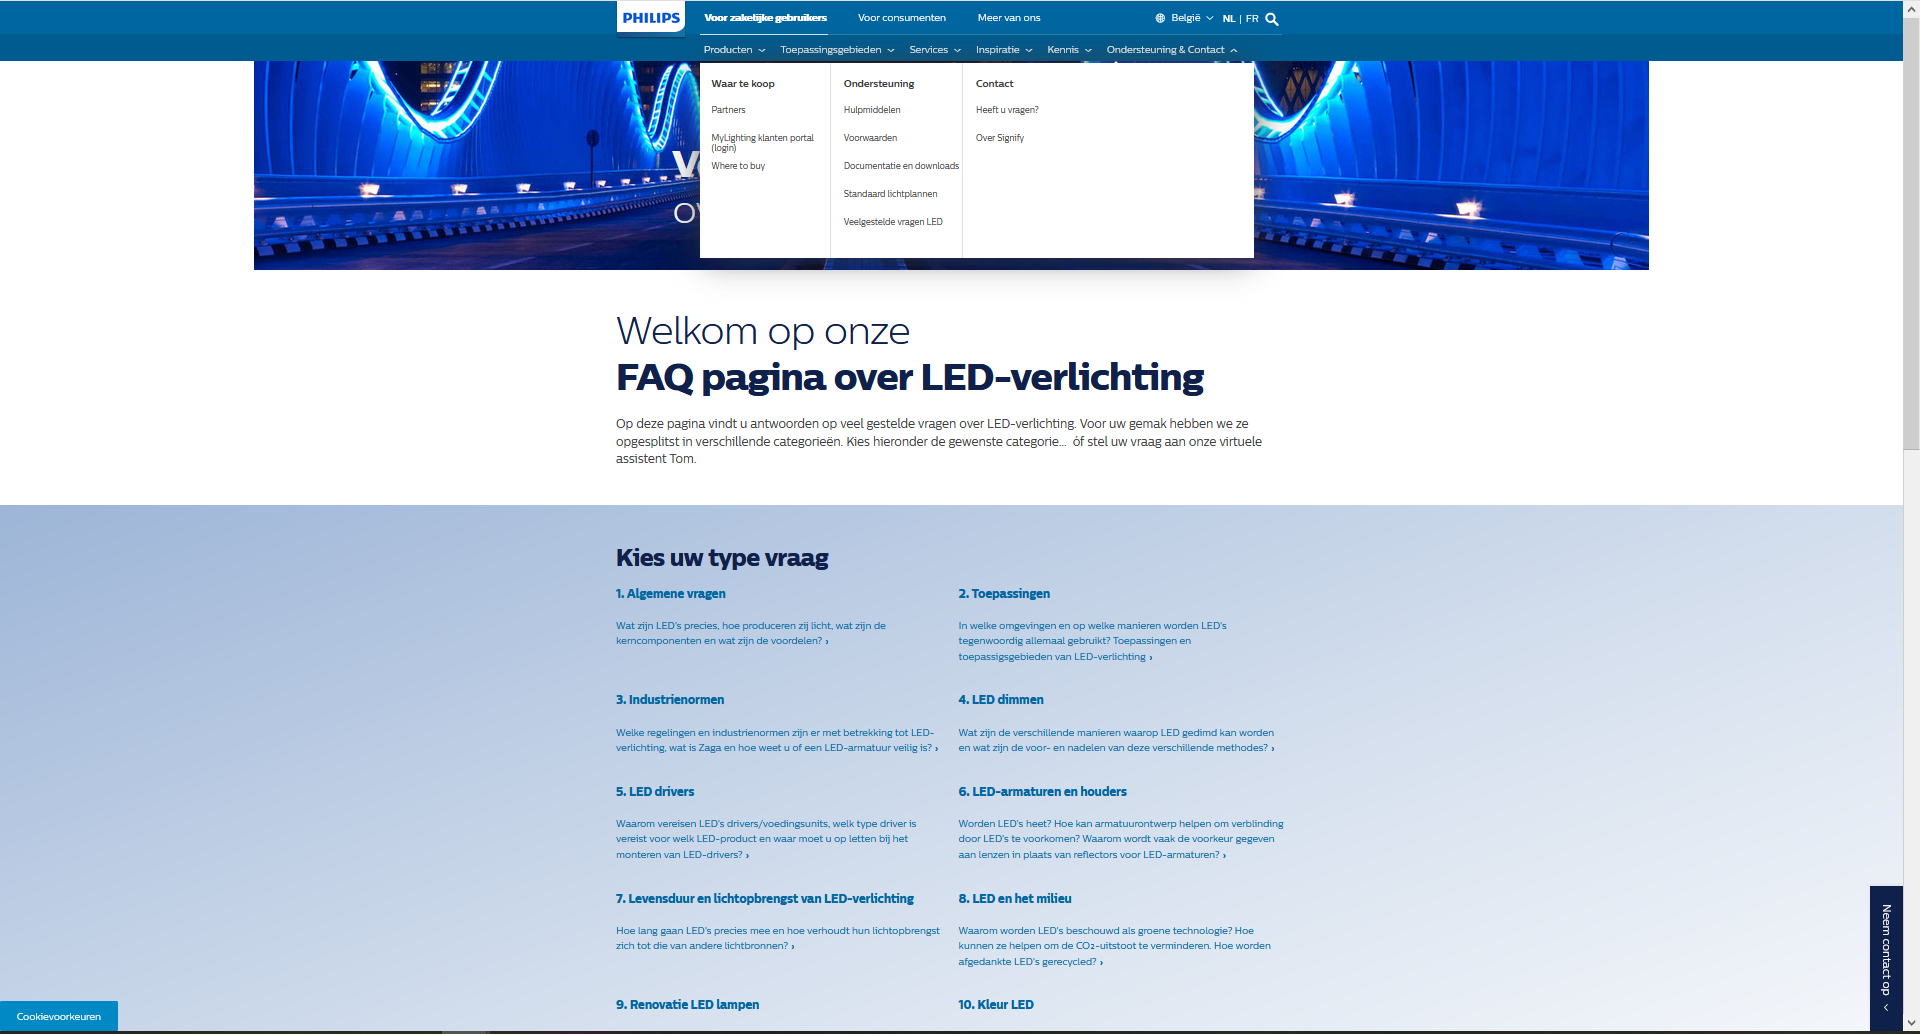 FAQ van fabrikant over ledverlichting